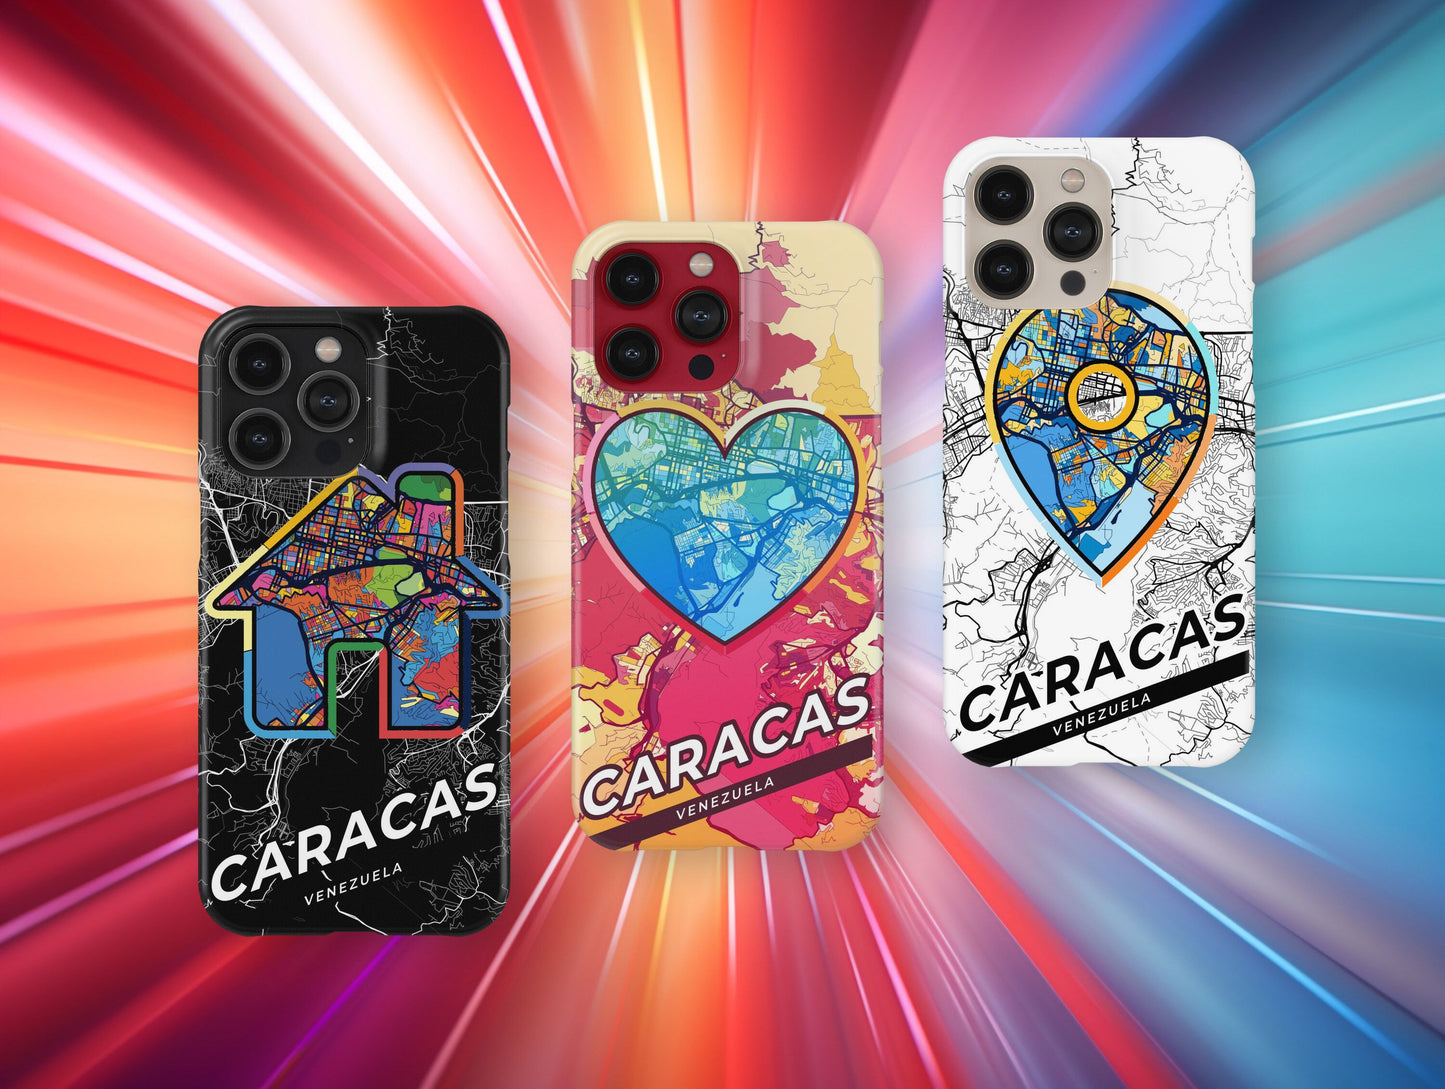 Caracas Venezuela slim phone case with colorful icon. Birthday, wedding or housewarming gift. Couple match cases.